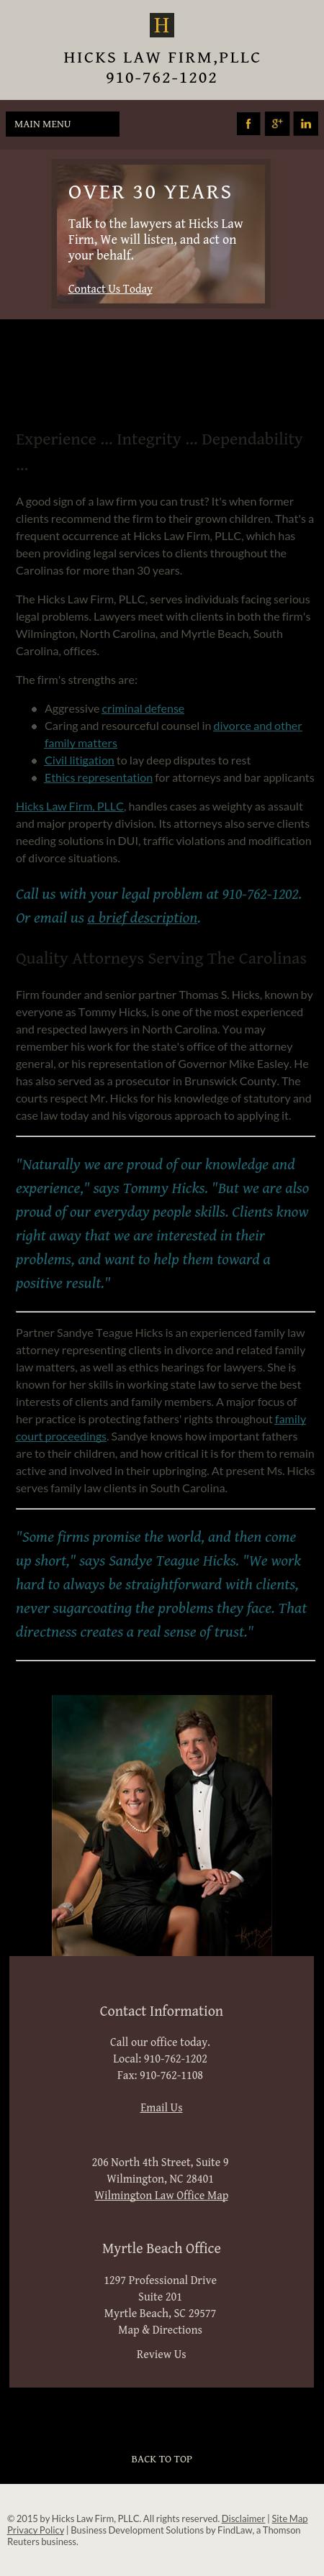 Hicks Law Firm, PLLC - Wilmington NC Lawyers